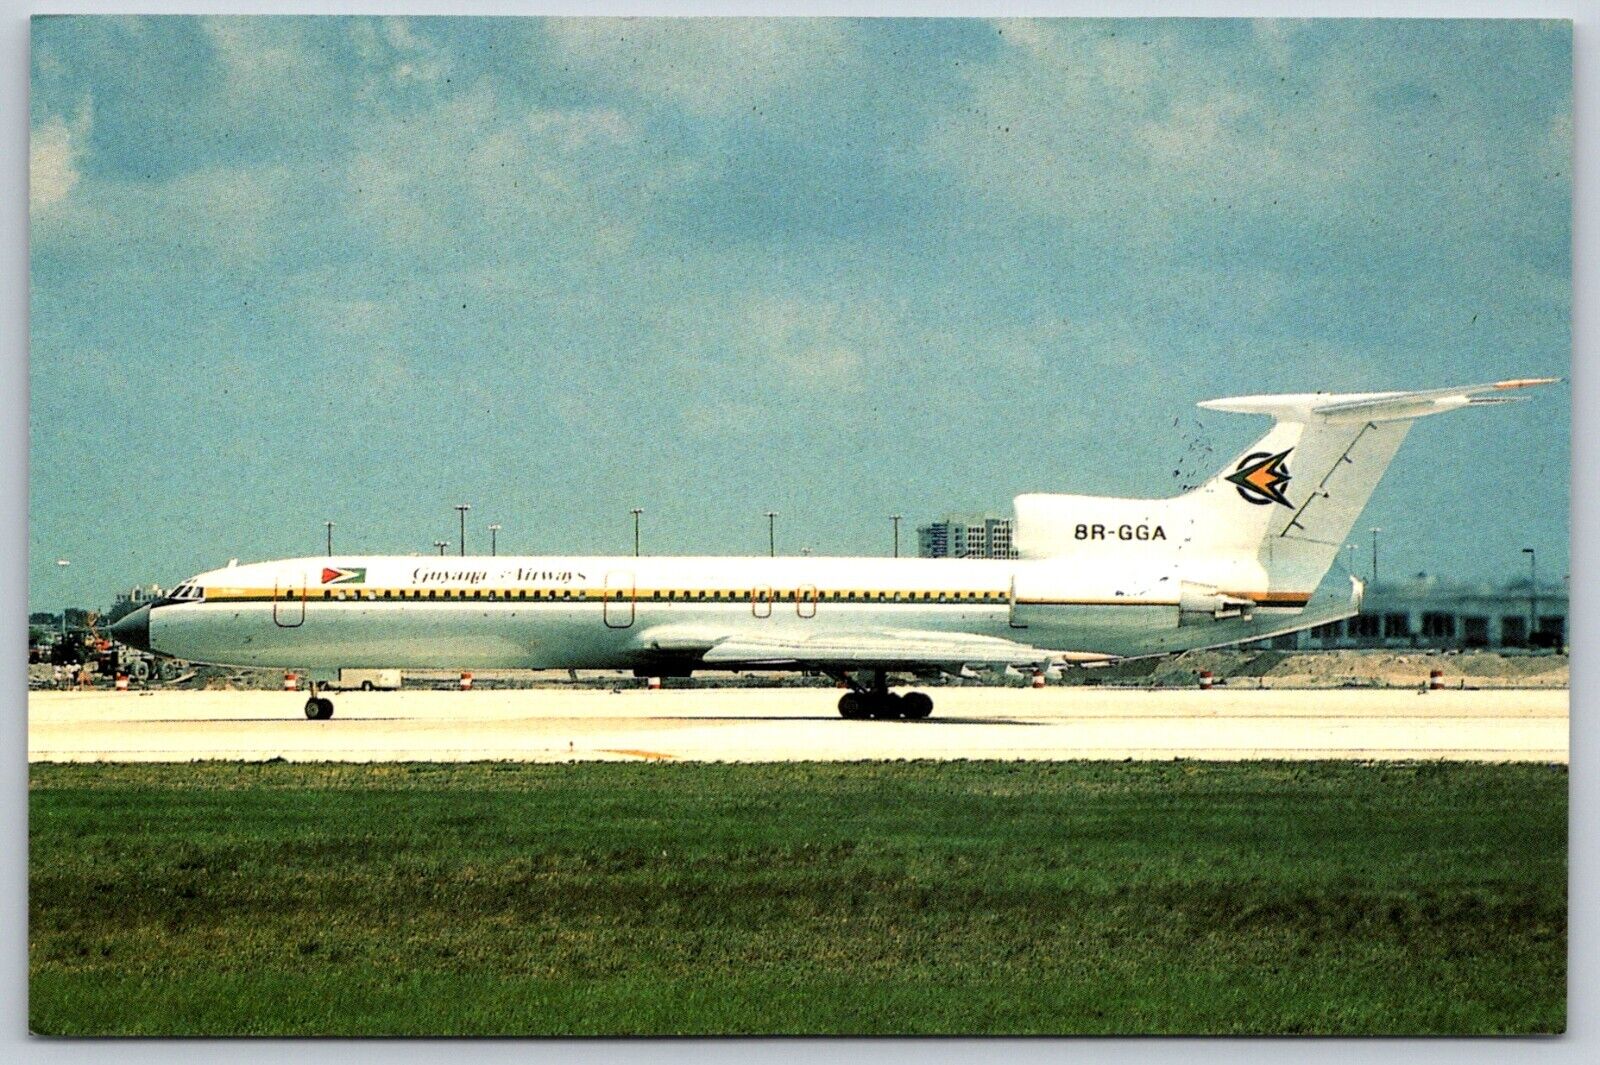 Guyana Airways Tupolev 154 8R-GGA airline Postcard